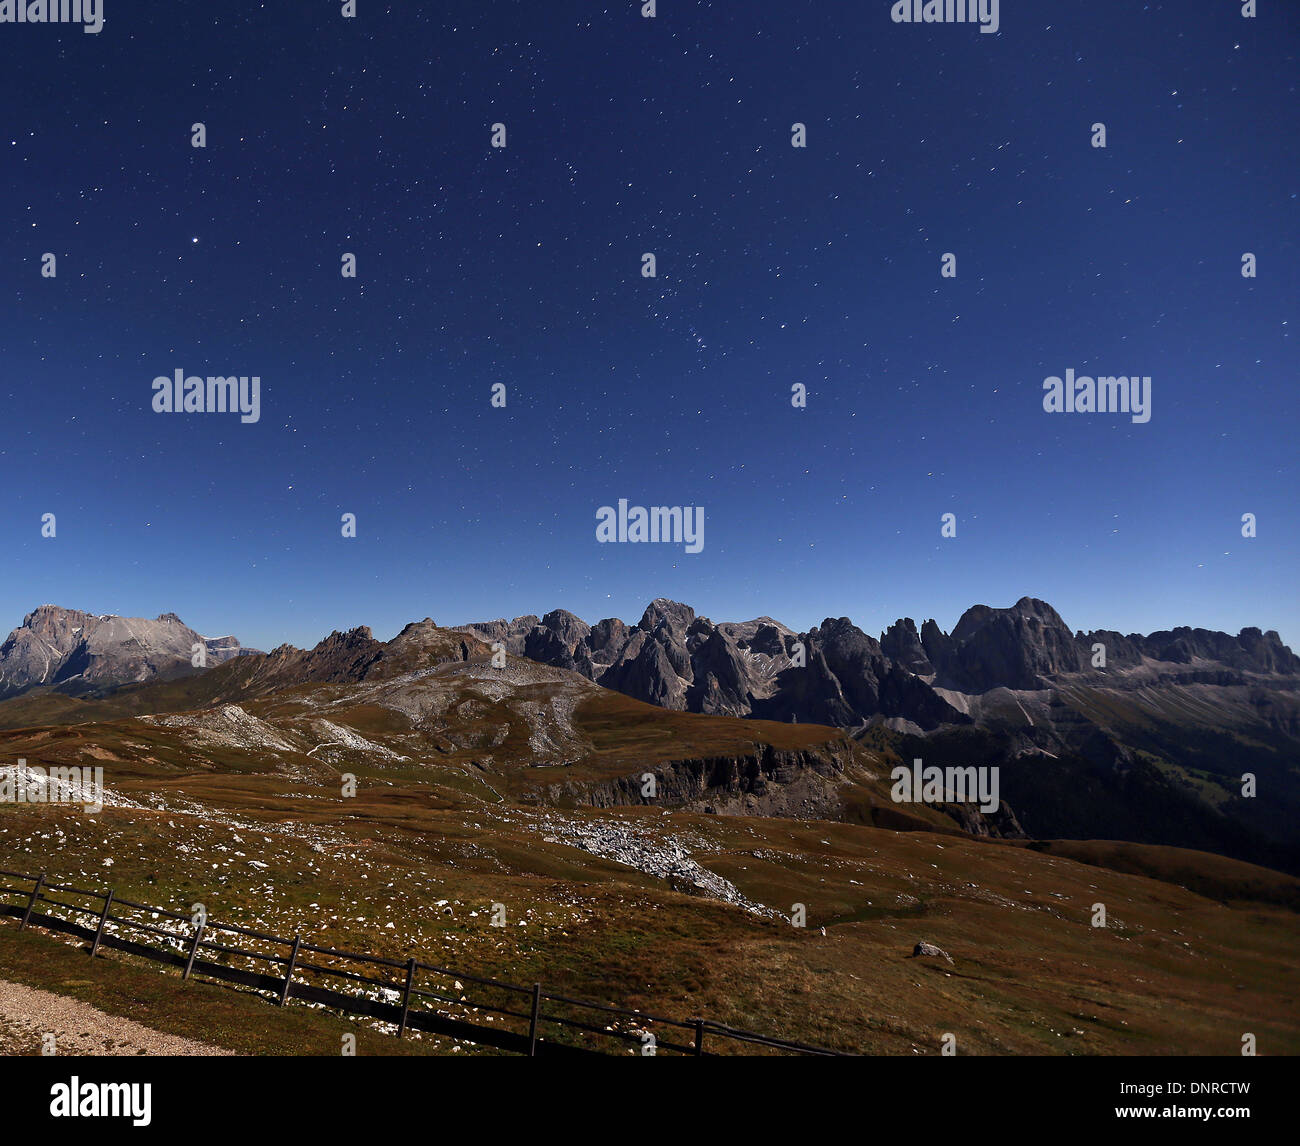 Moonlight on the Catinaccio mountain massif. The Dolomites. View from the Sciliar massif. Italian Alps. Night landscape. Europe. Stock Photo